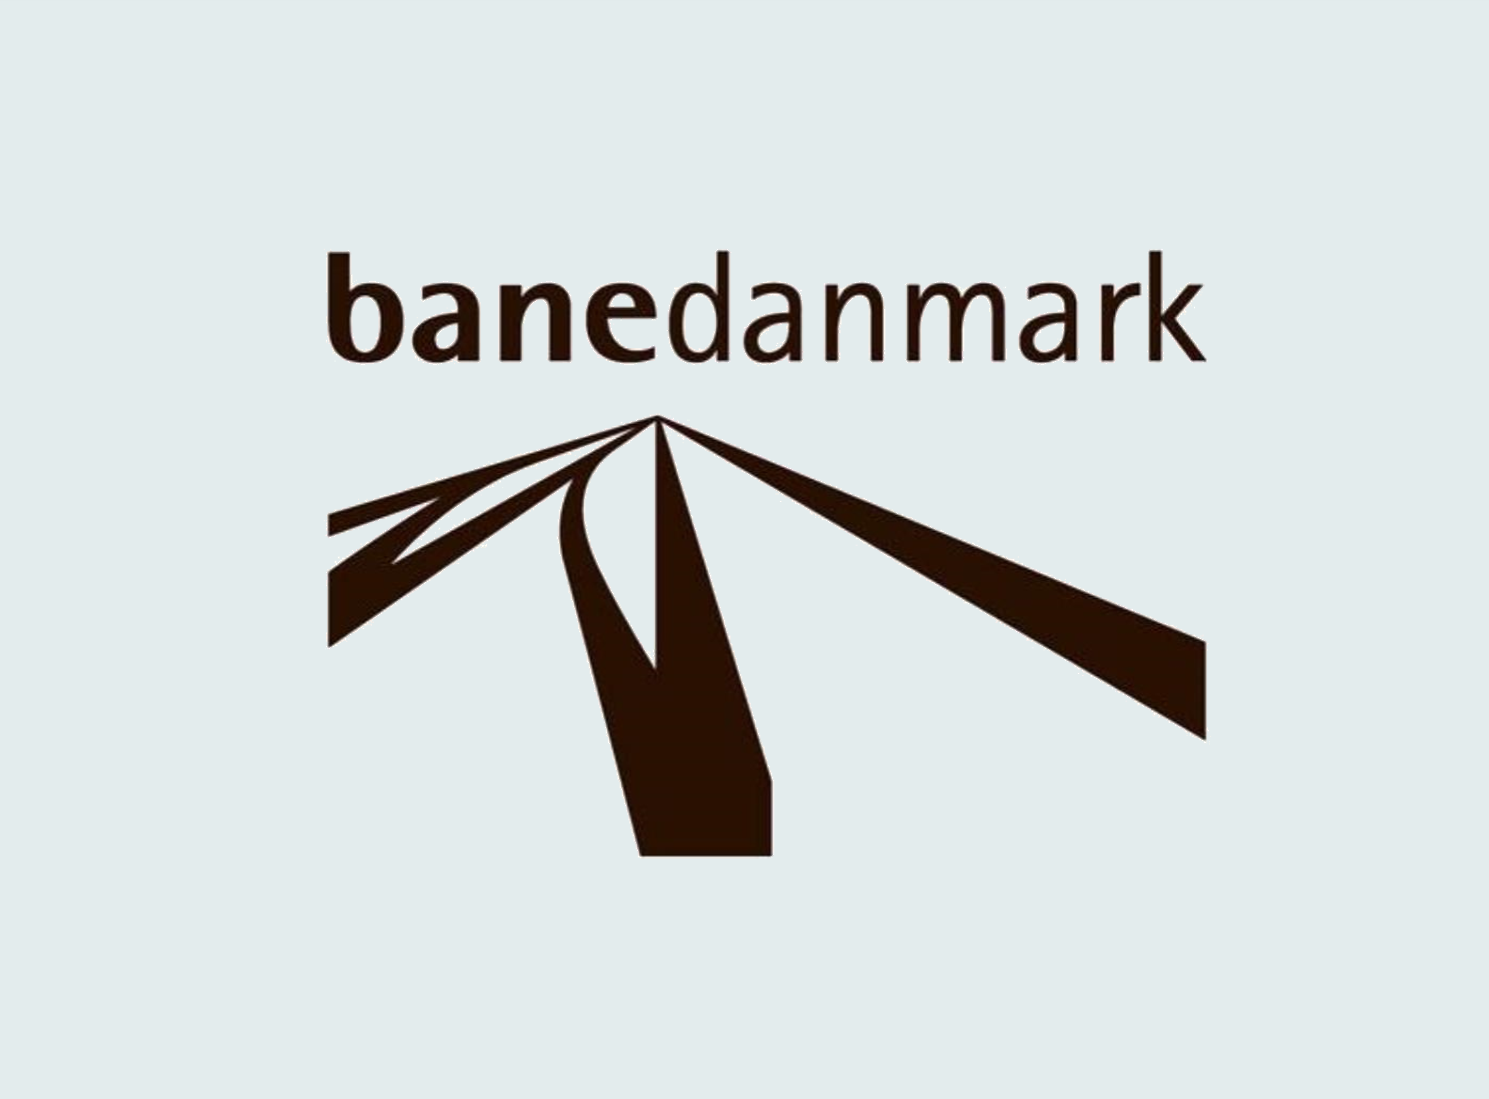 Bane Danmark logo